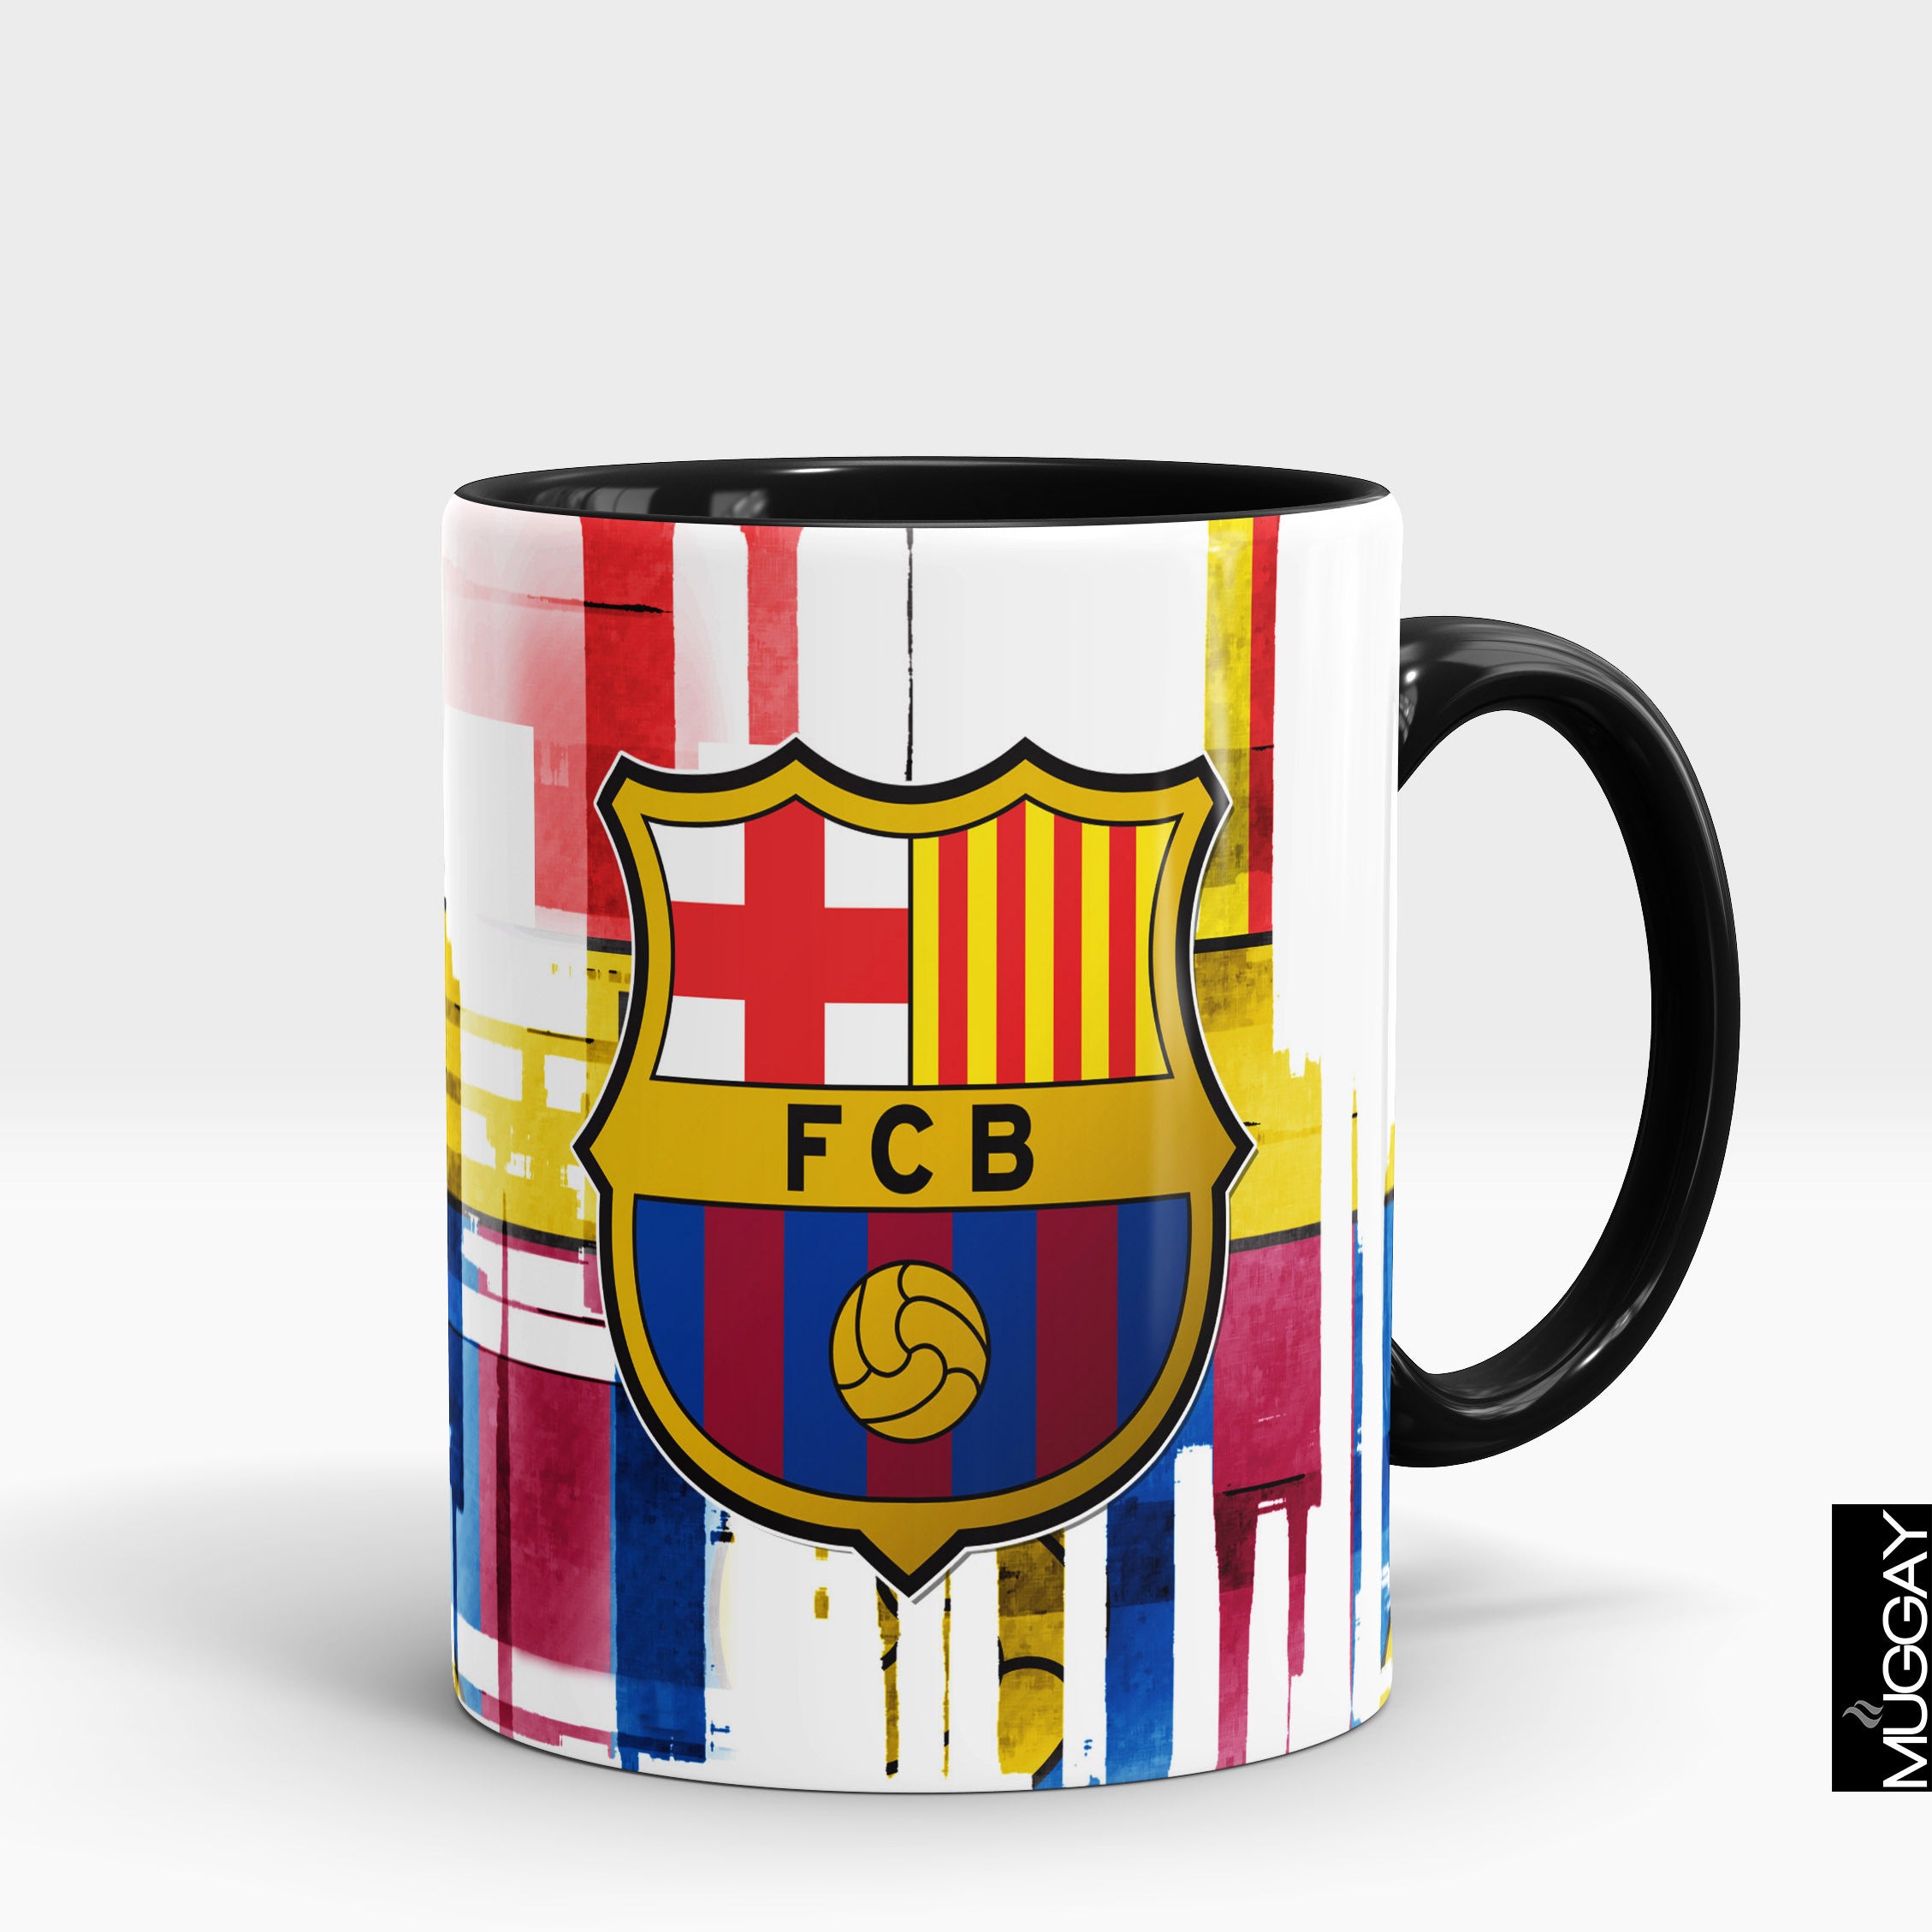 Football Theme mugs30